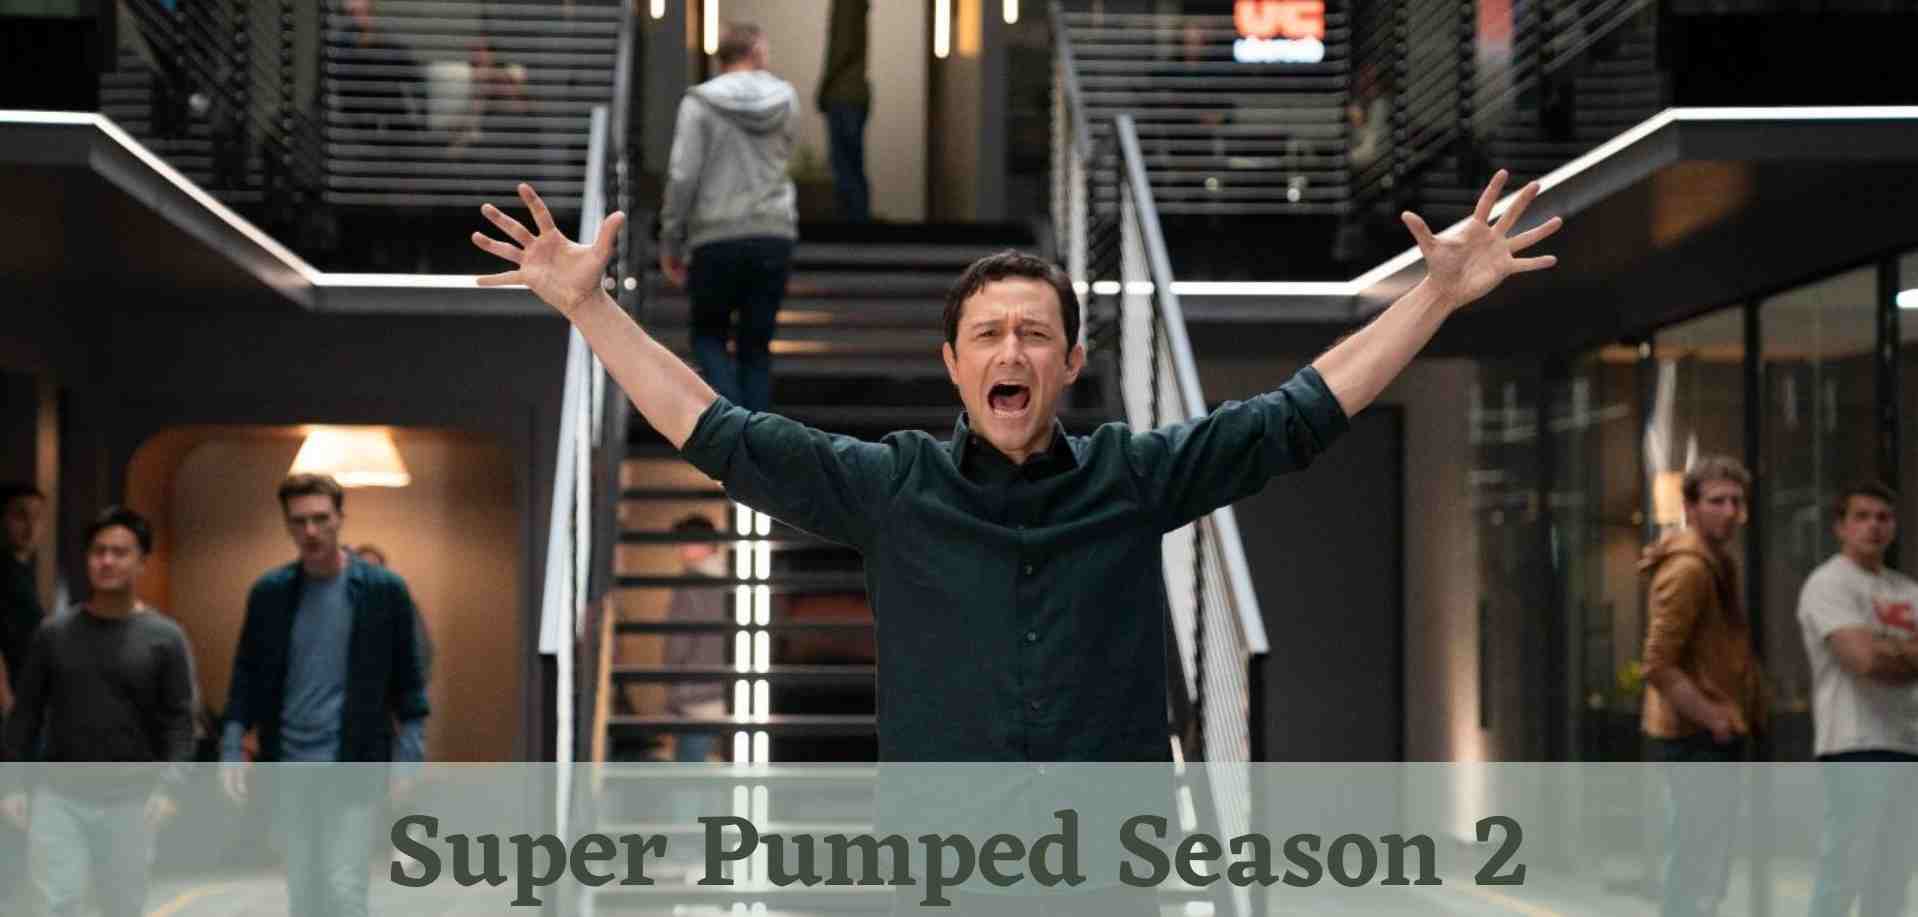 Super Pumped Season 2